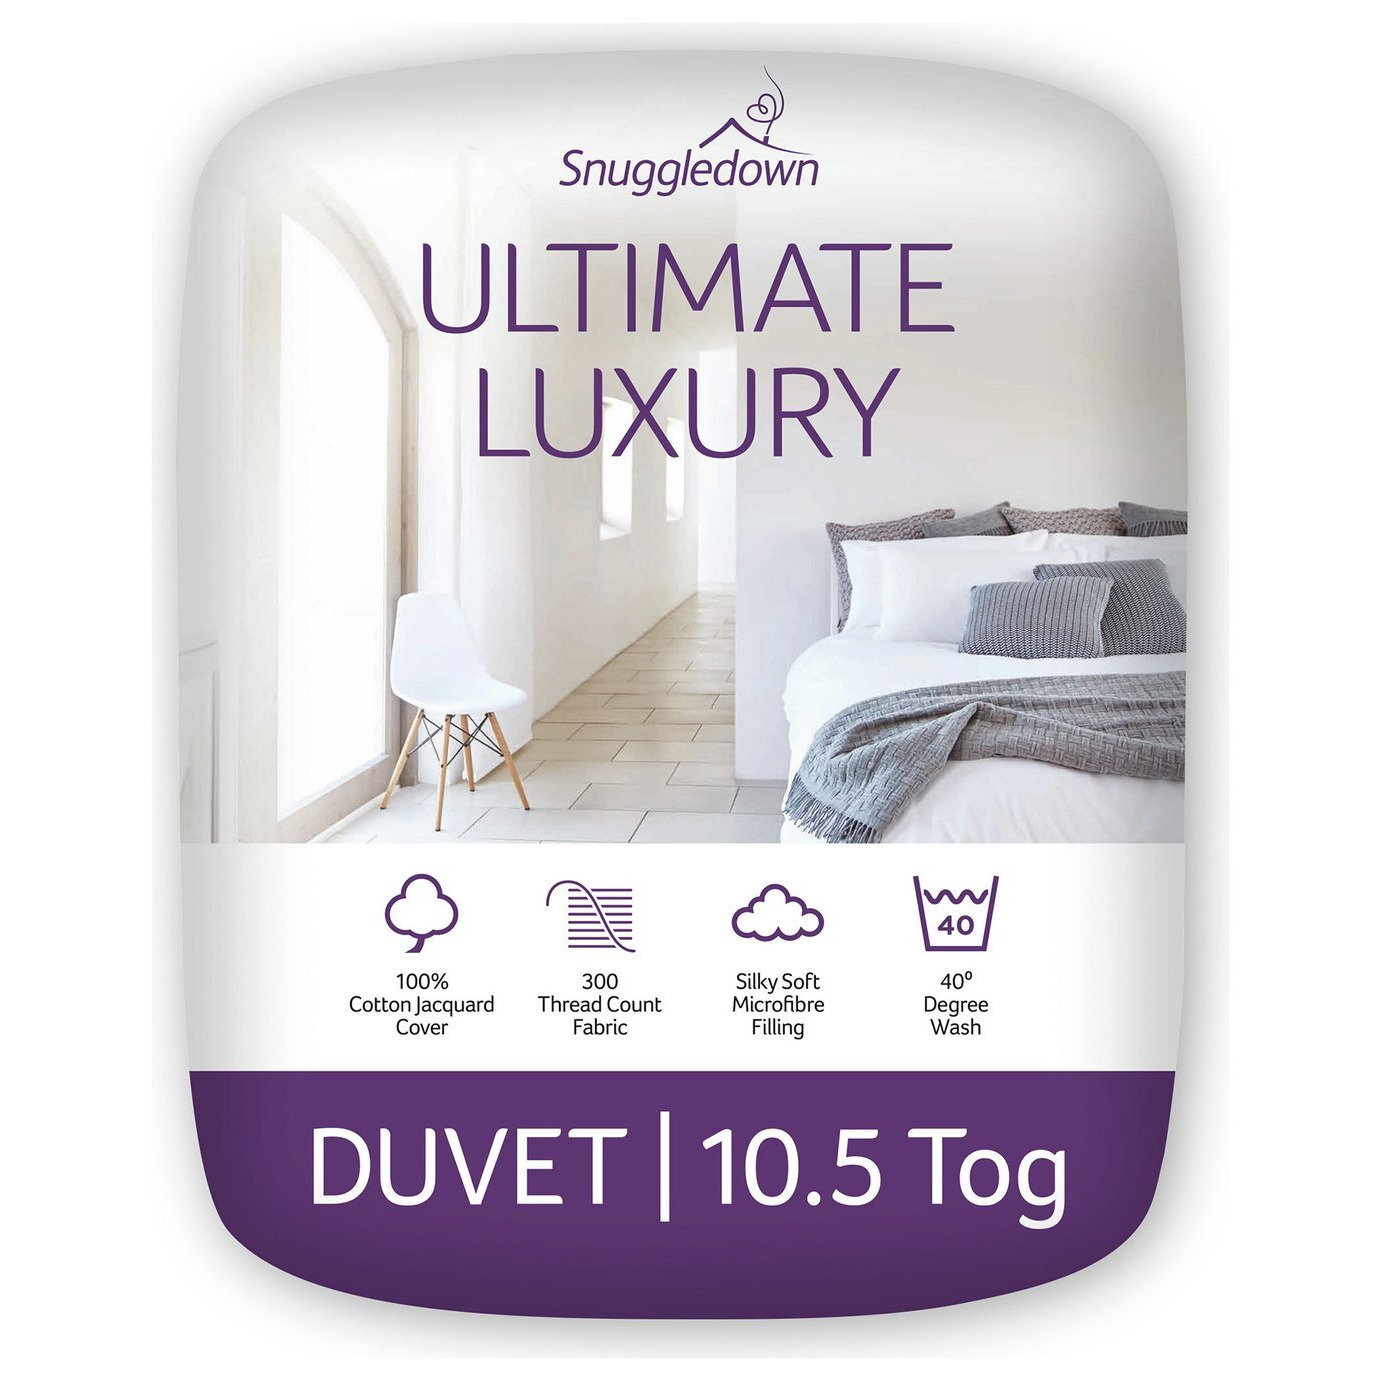 Snuggledown Retreat Ultimate Luxury 10.5 Tog Duvet - Double - image 1